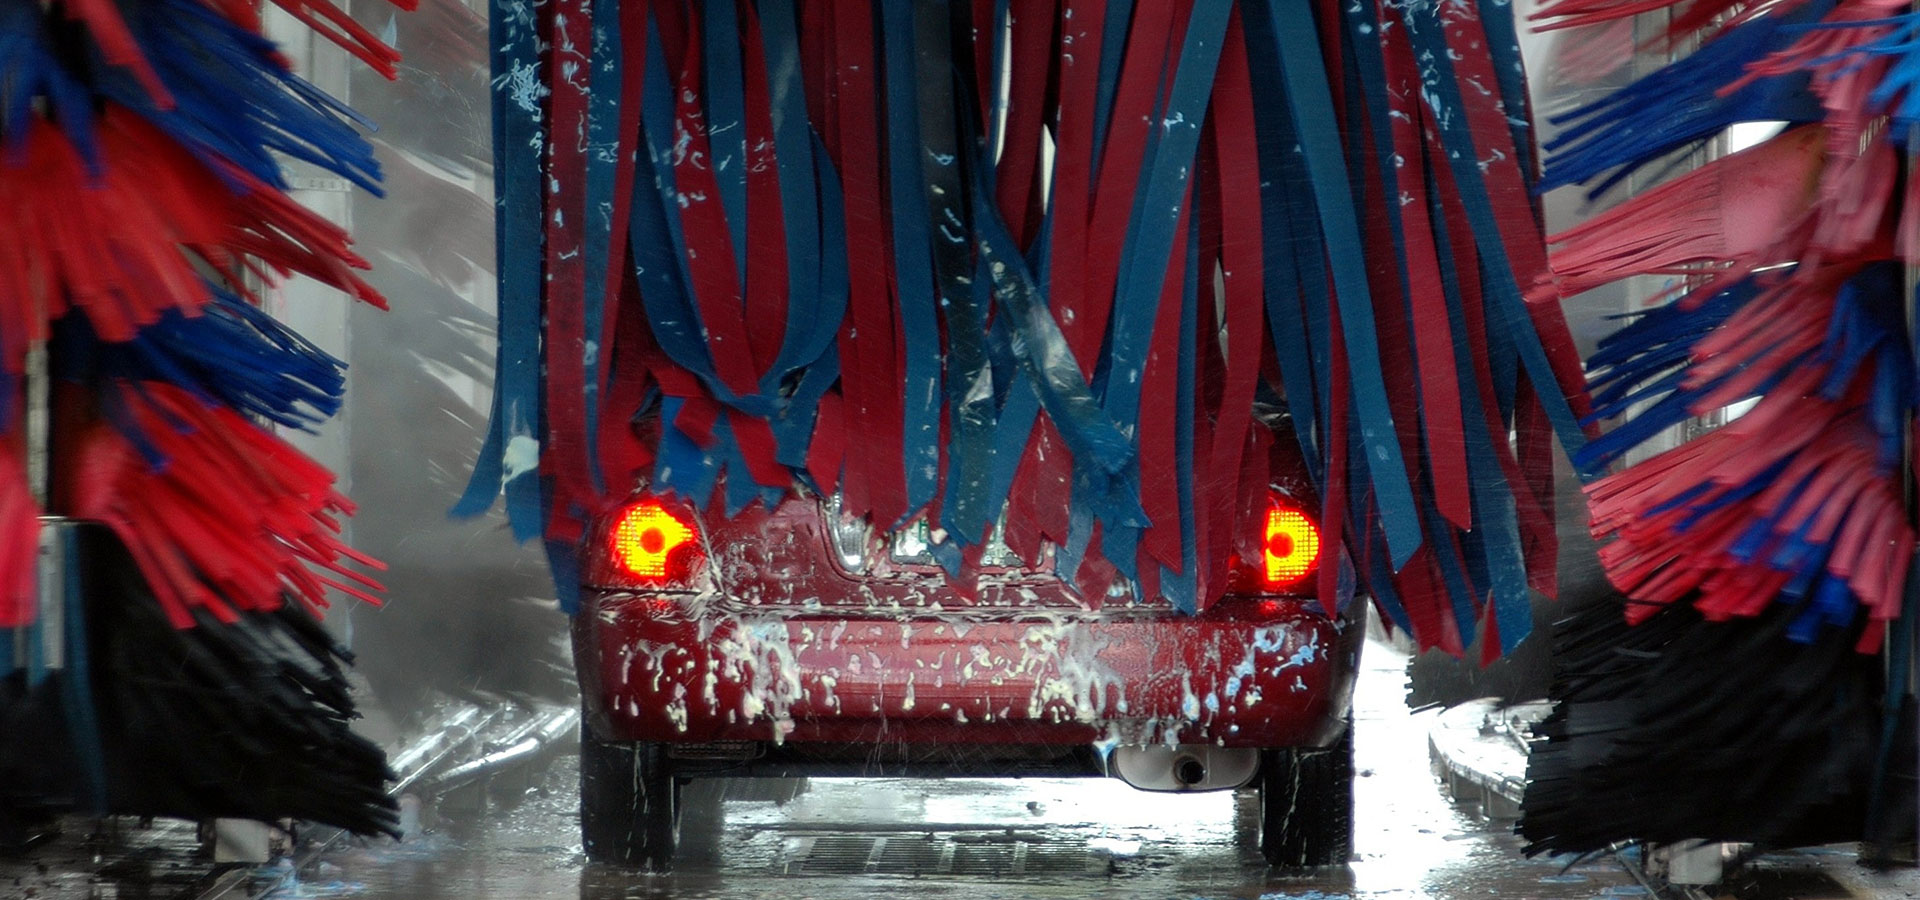 car wash image 01